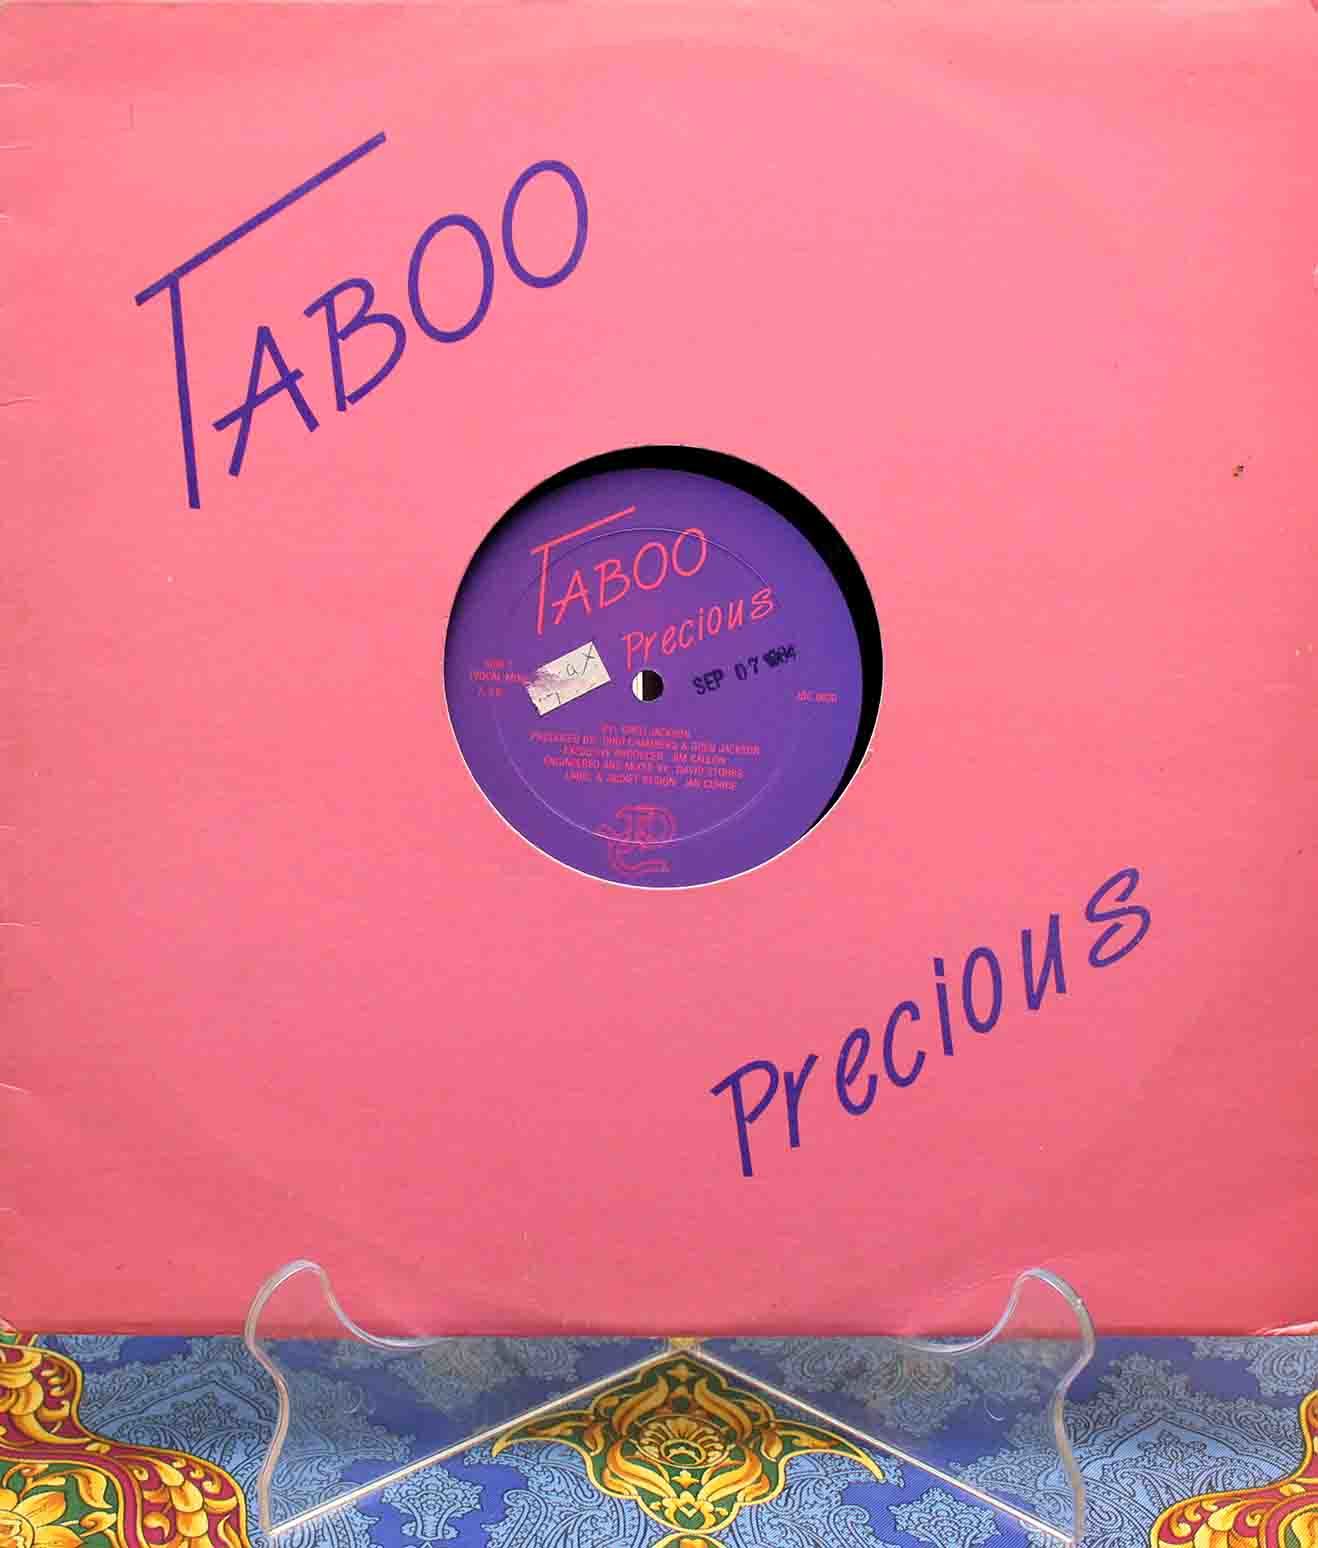 Precious Taboo US 01